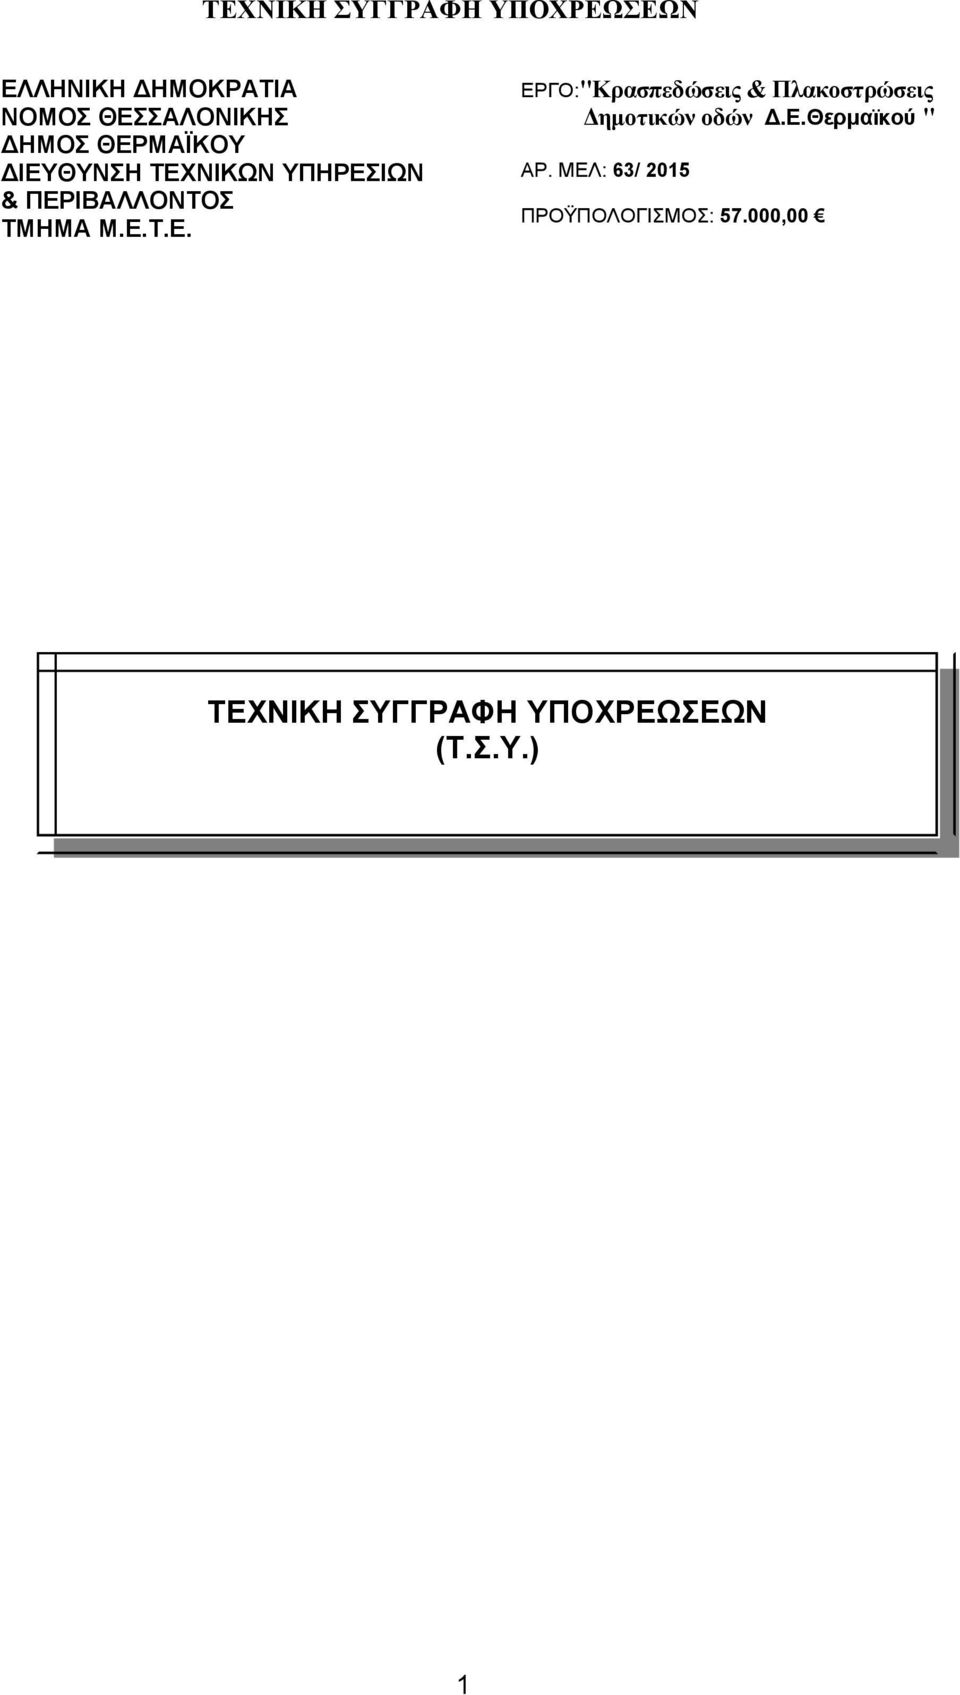 E.Θερμαϊκού " ΑΡ. ΜΕΛ: 63/ 2015 ΠΡΟΫΠΟΛΟΓΙΣΜΟΣ: 57.